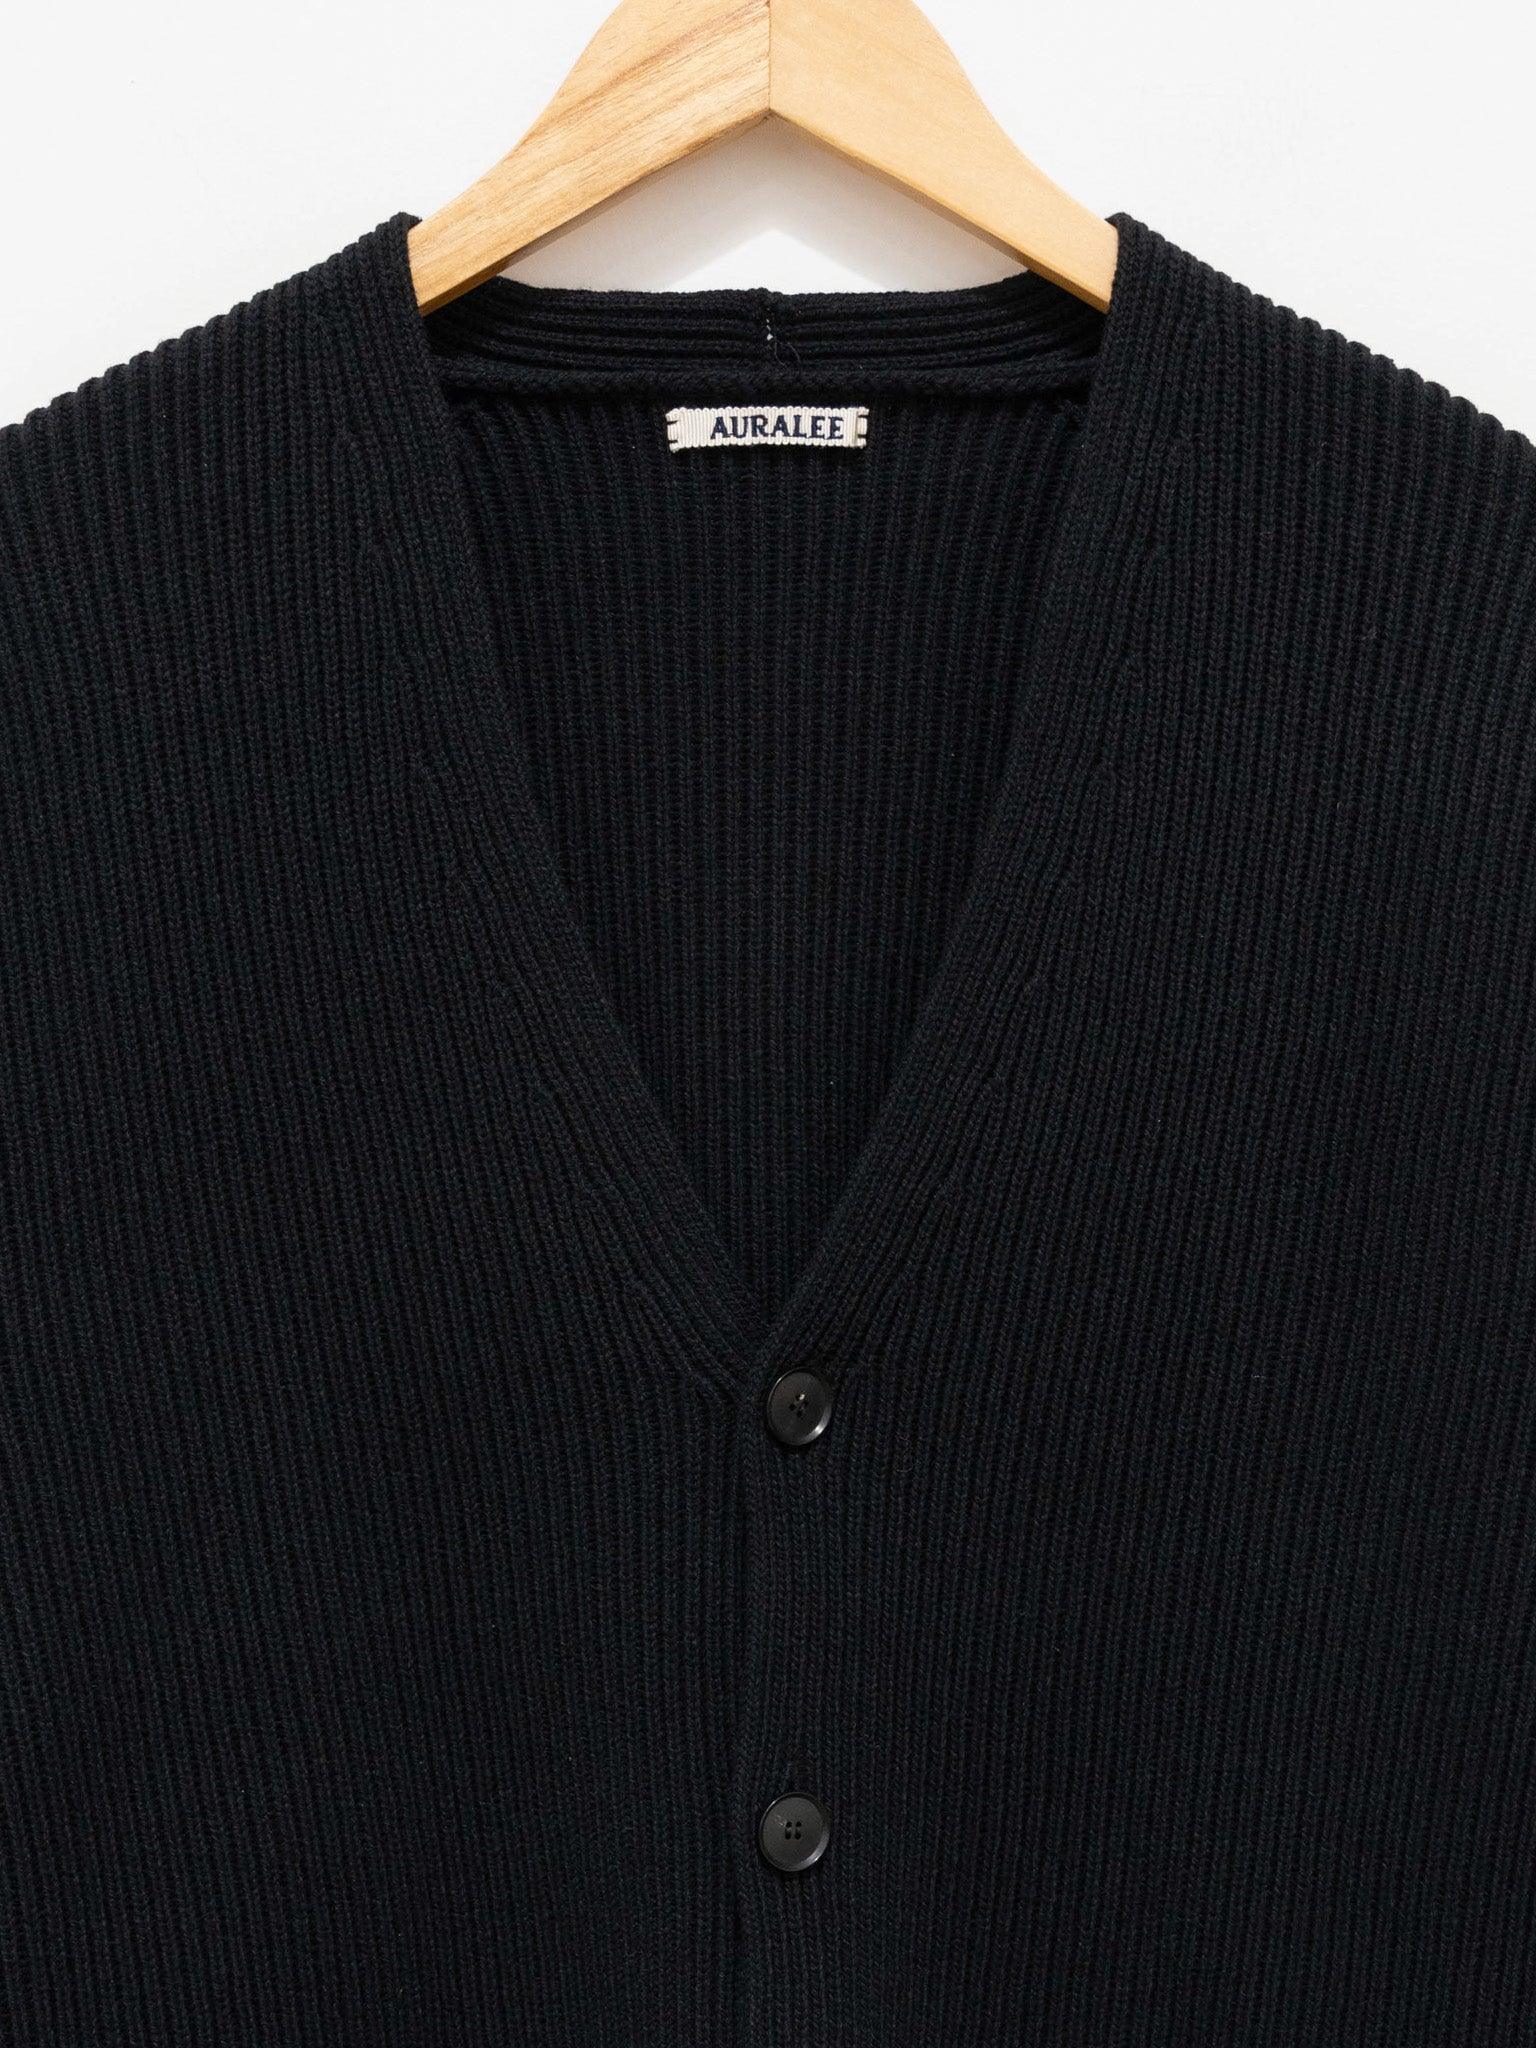 Namu Shop - Auralee Super Fine Wool Rib Knit Big Cardigan - Black